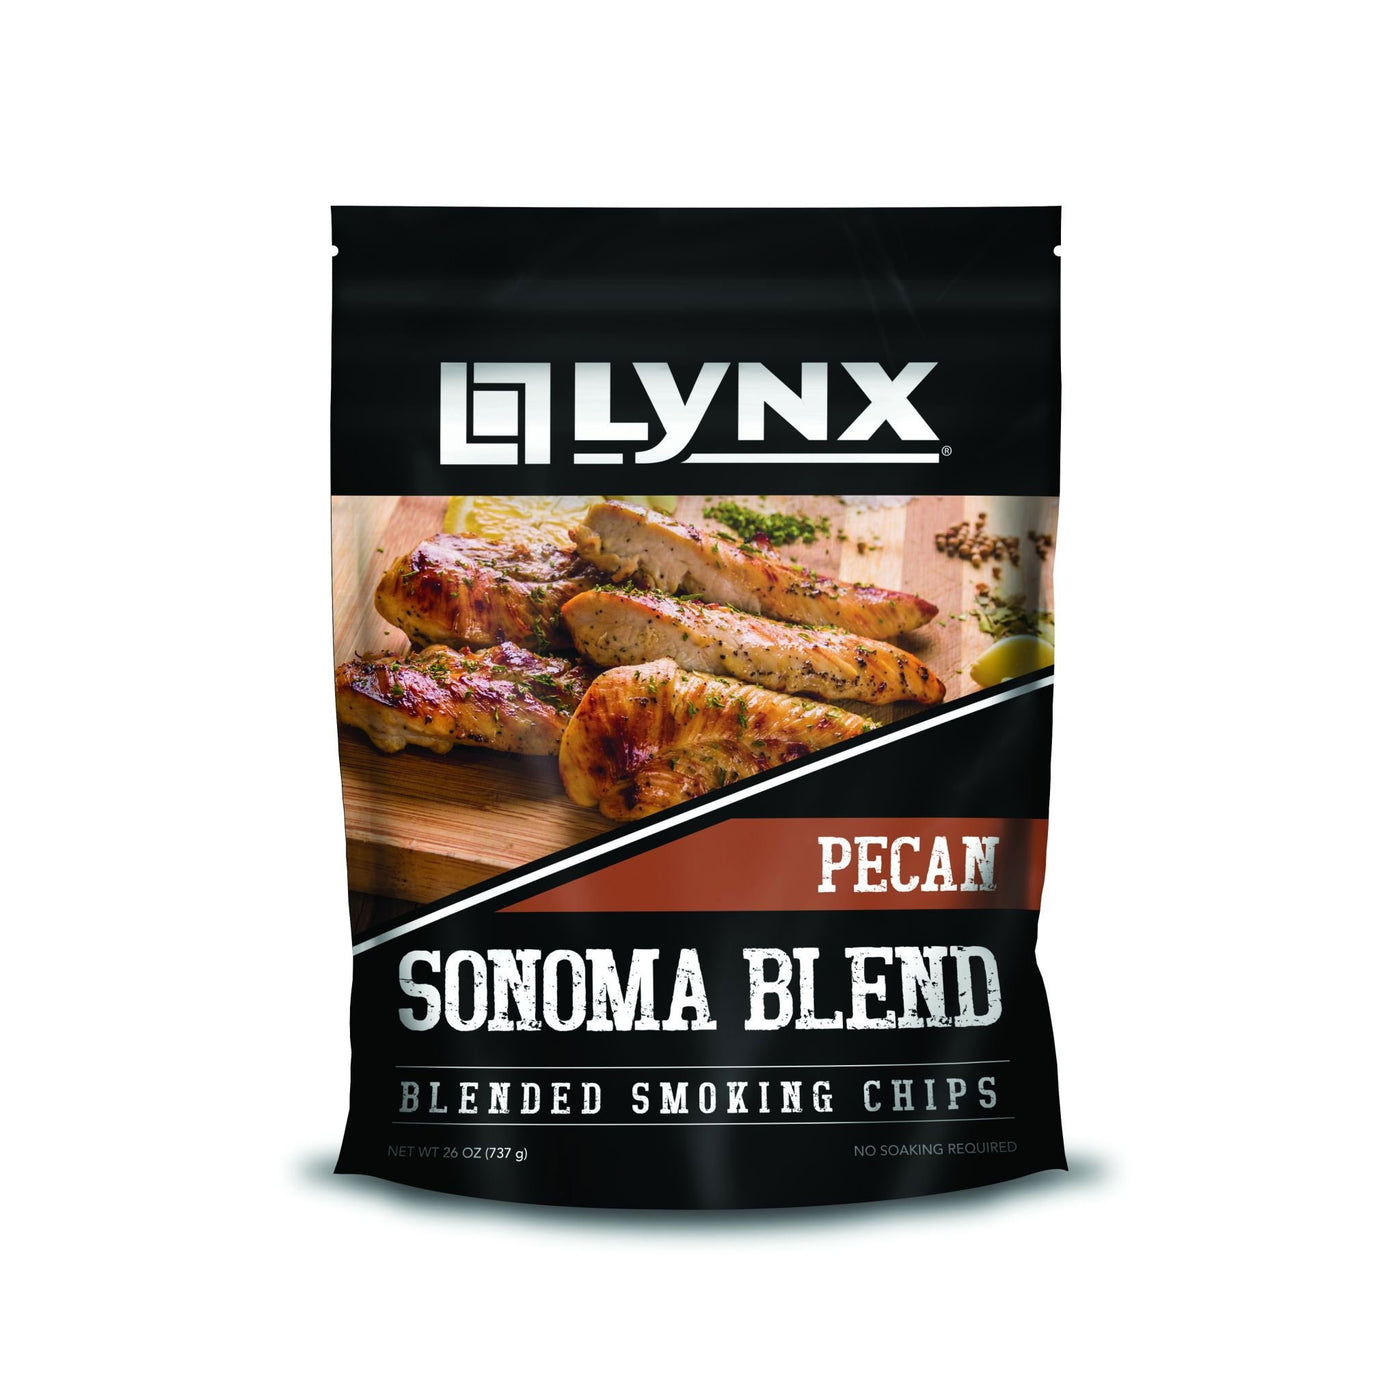 Sonoma Blend - Blended Smoking Chips - Pecan - Lynx brand LSCP